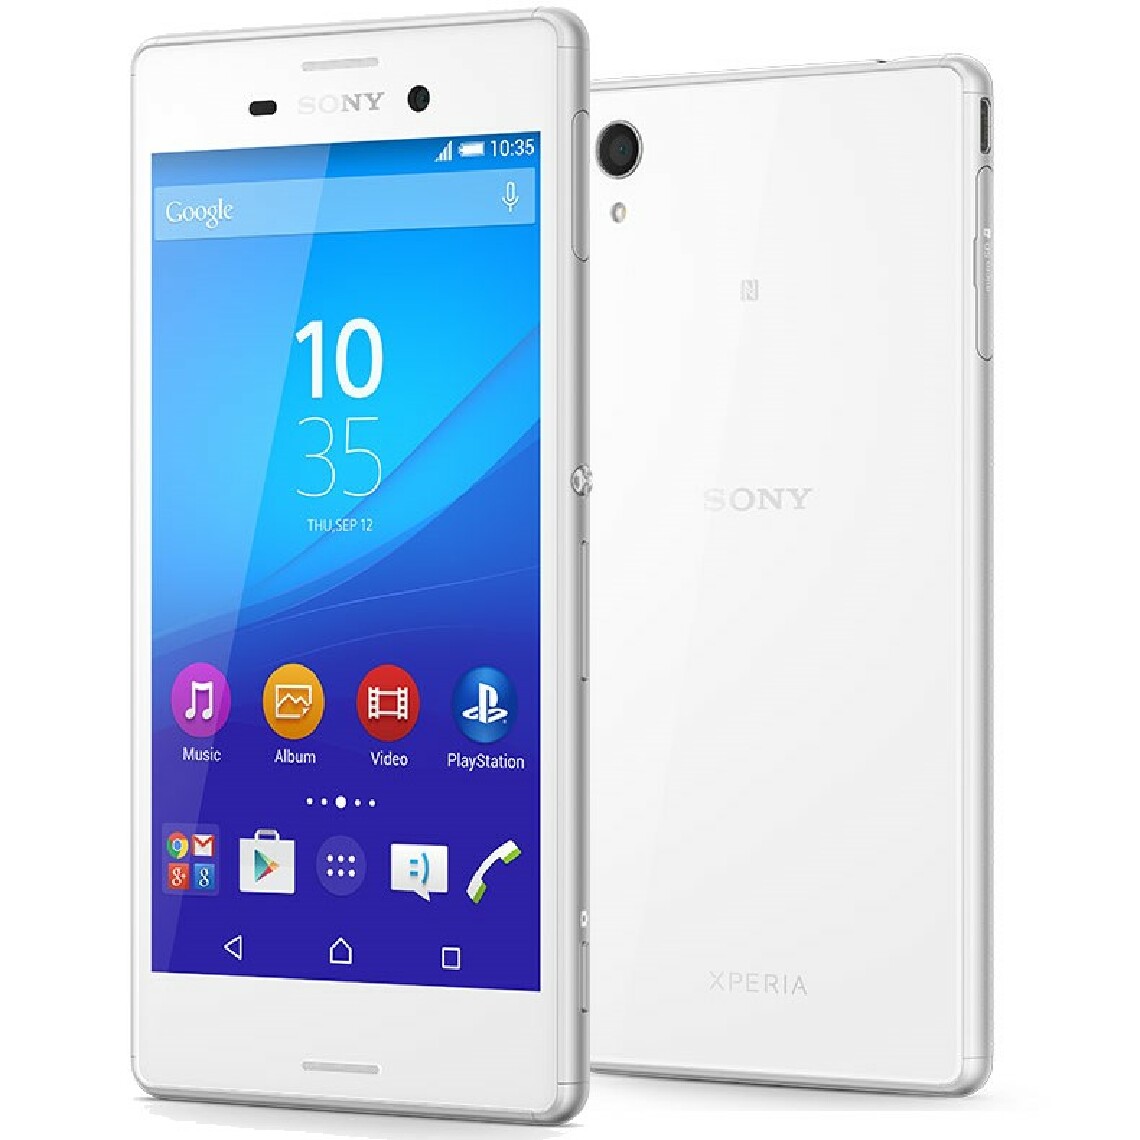 Sony - Sony XPERIA M4 Aqua blanc débloqué - Smartphone Android